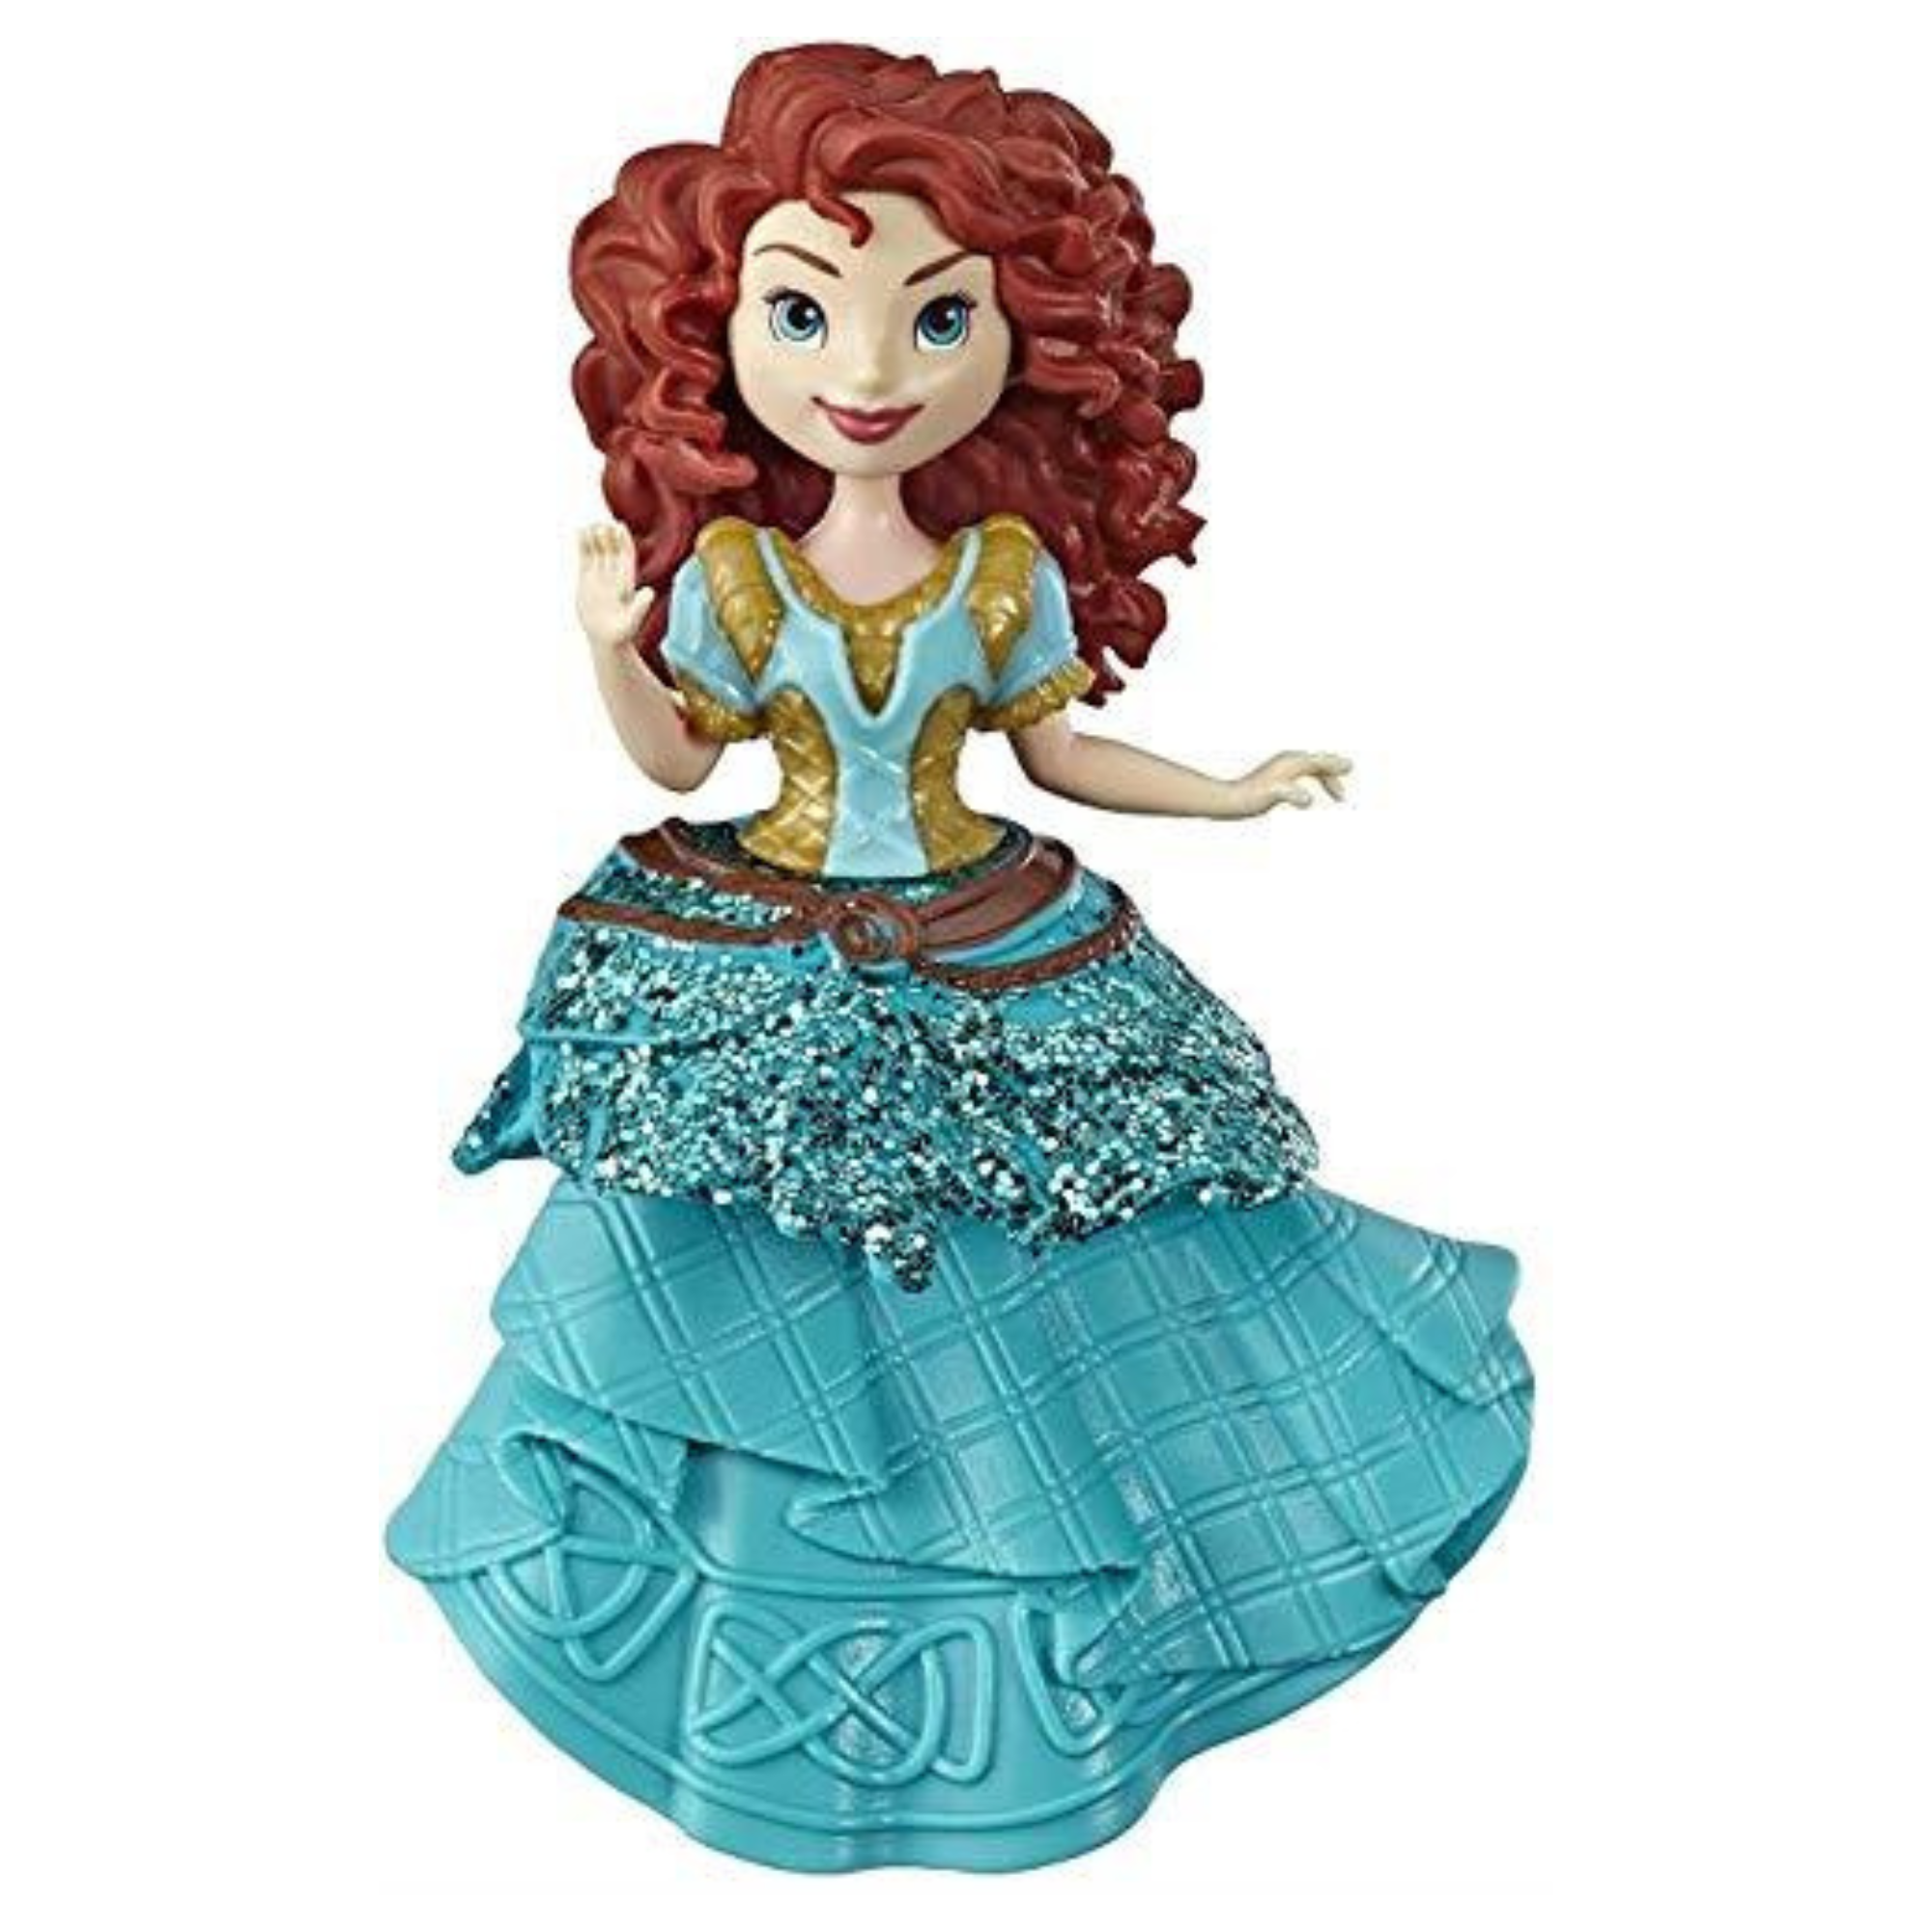 Disney Princess Hasbro Articulated Doll Merida With One Clip Dress - Royal Fashion Clip Toys - Toptoys2u